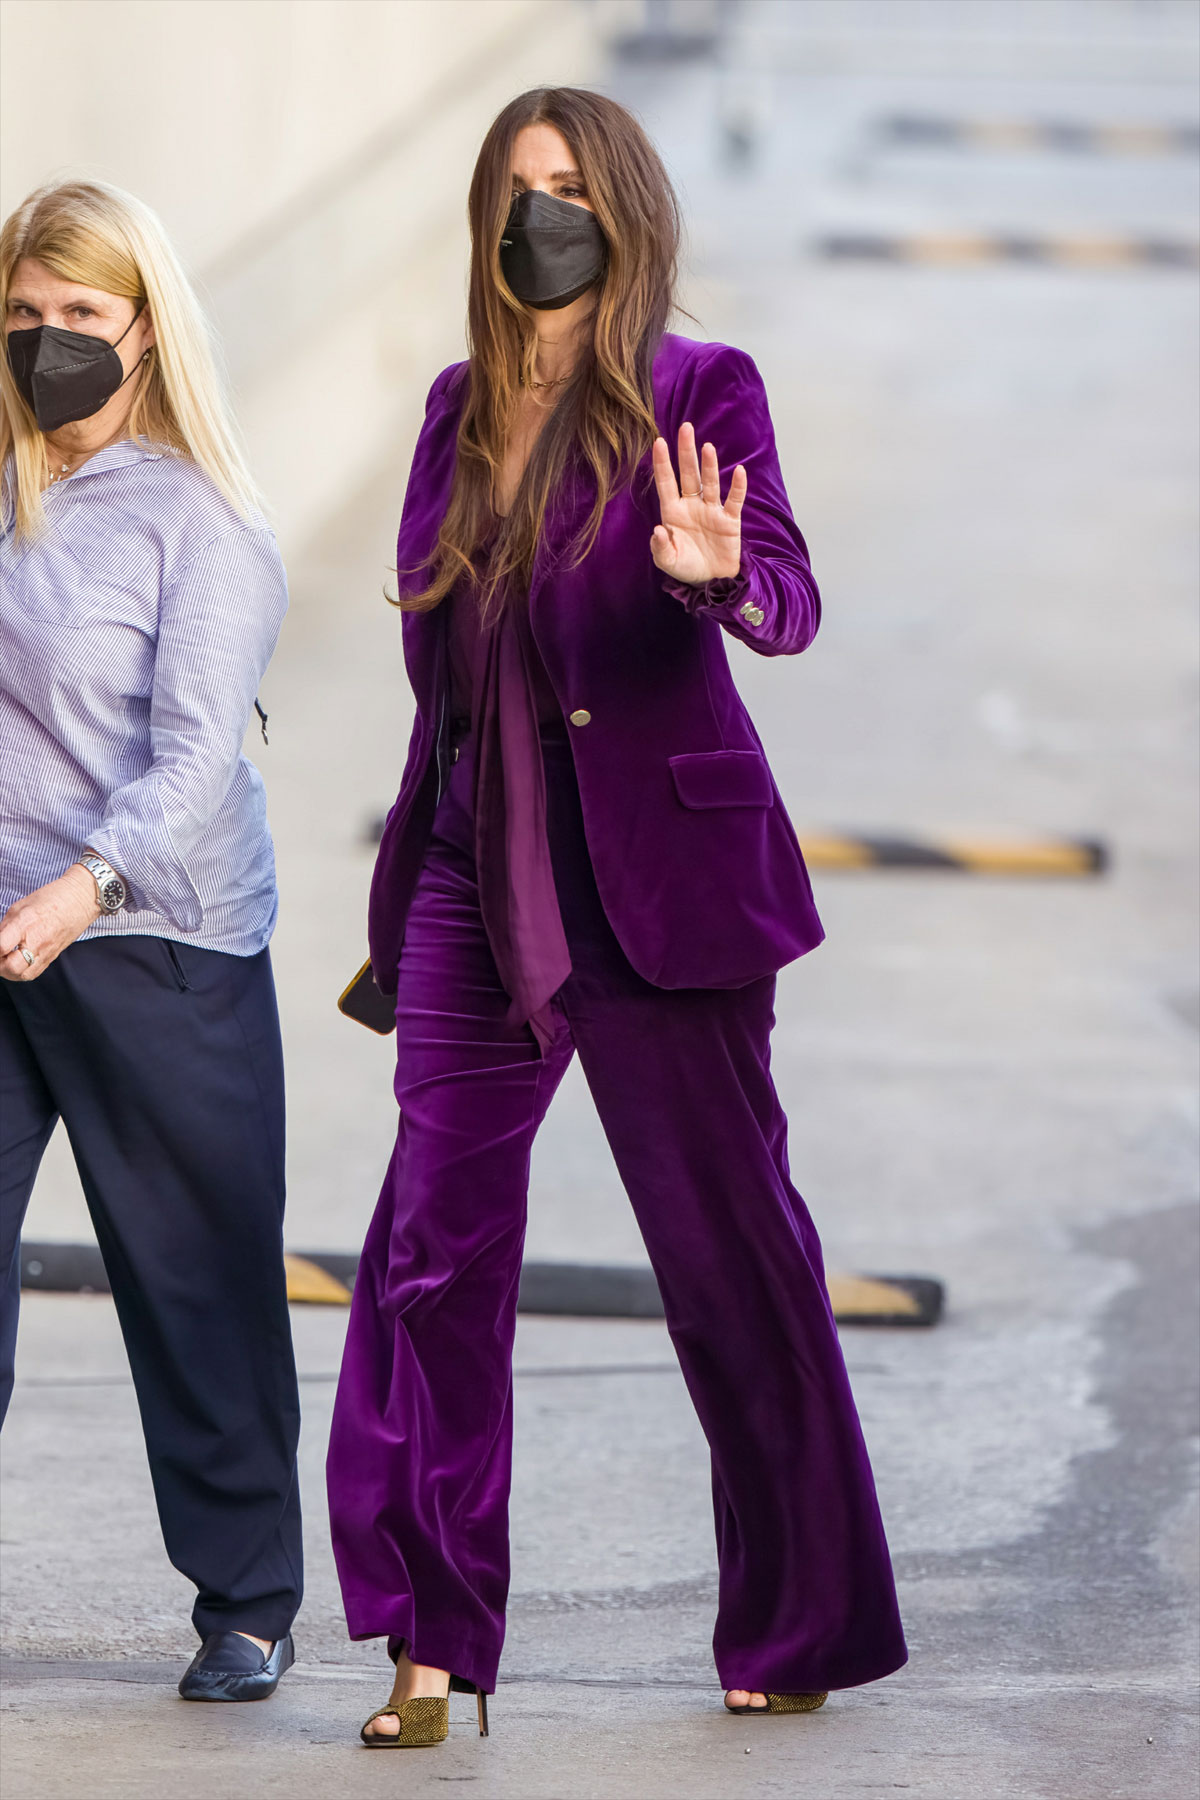 Sandra Bullock outside Kimmel's studios wearing a purple suit and a black mask